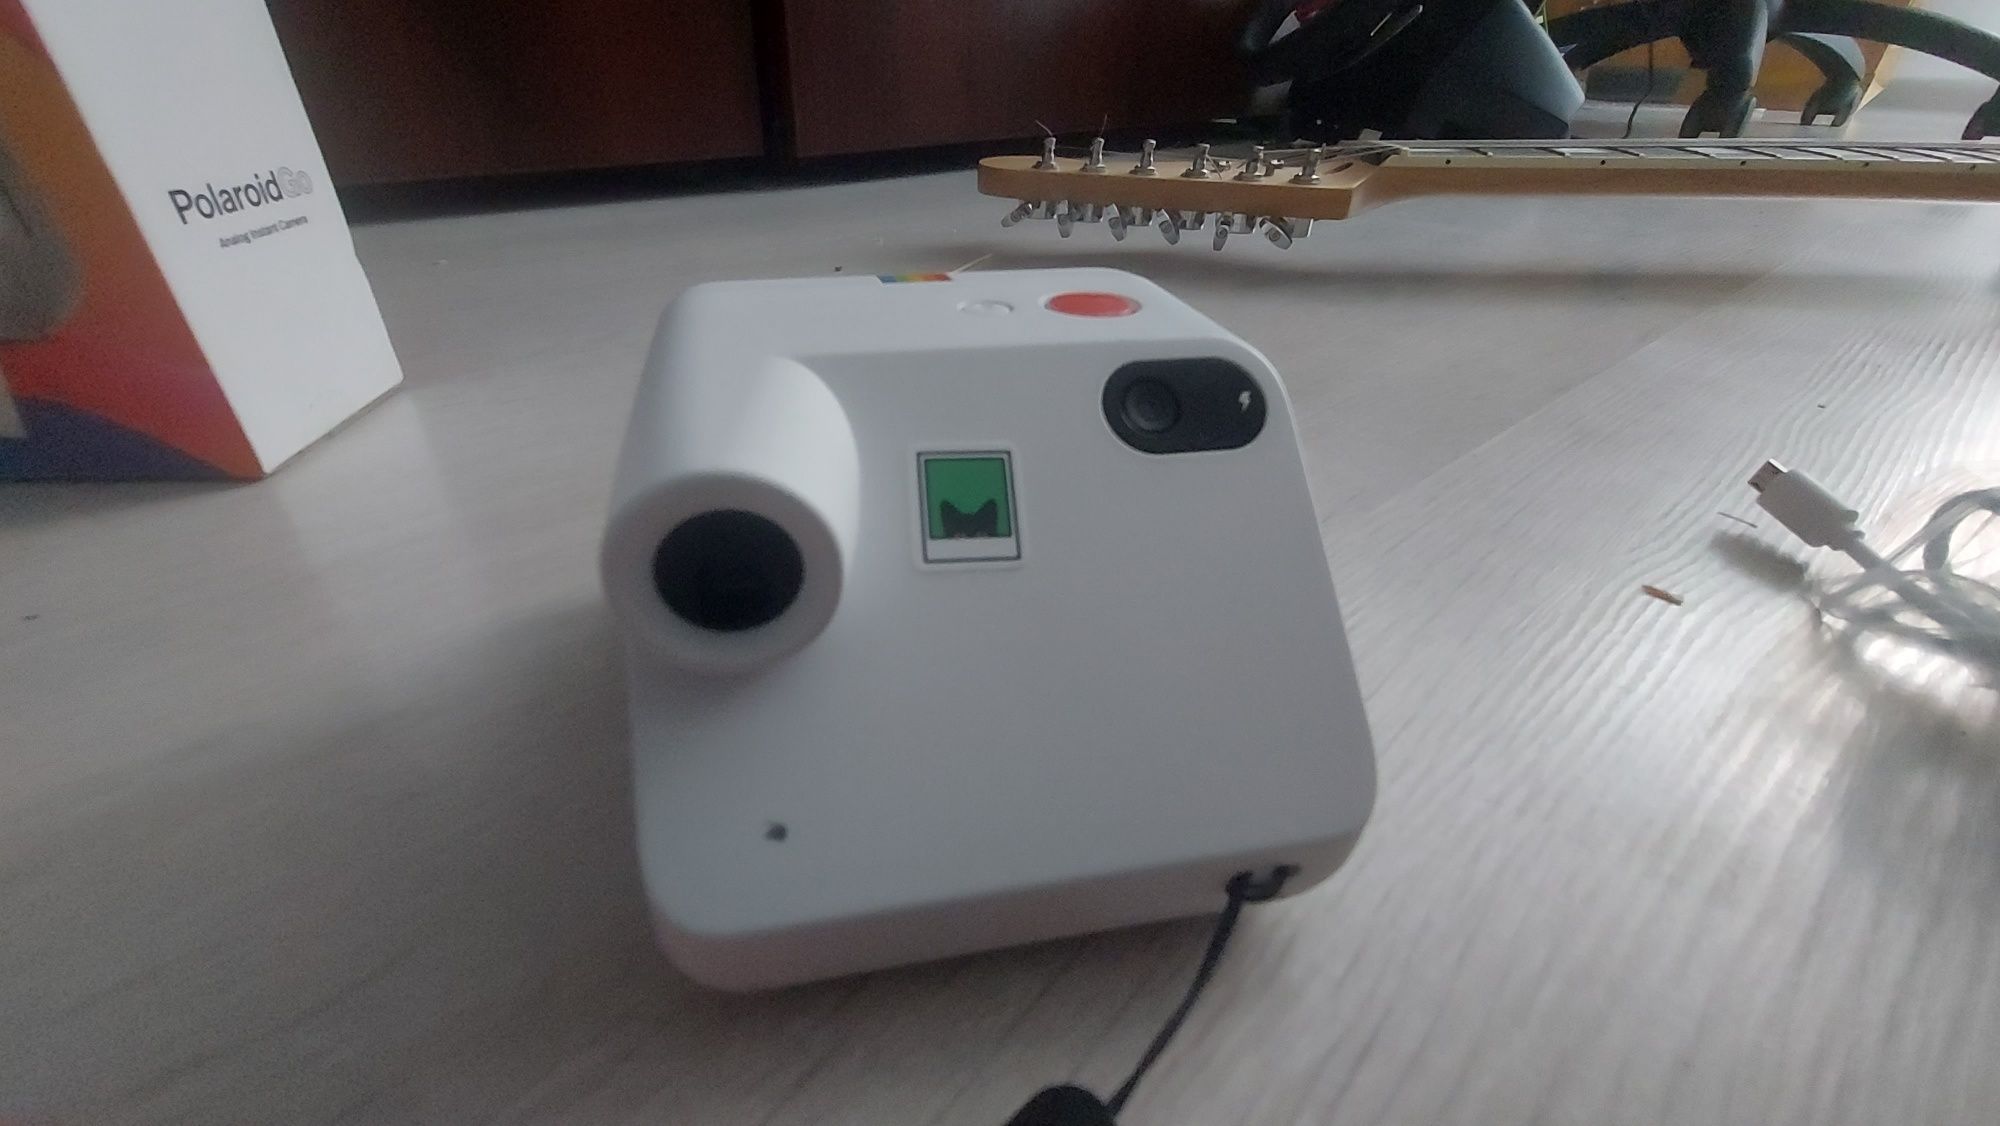 Camera PolaroidGo Instant